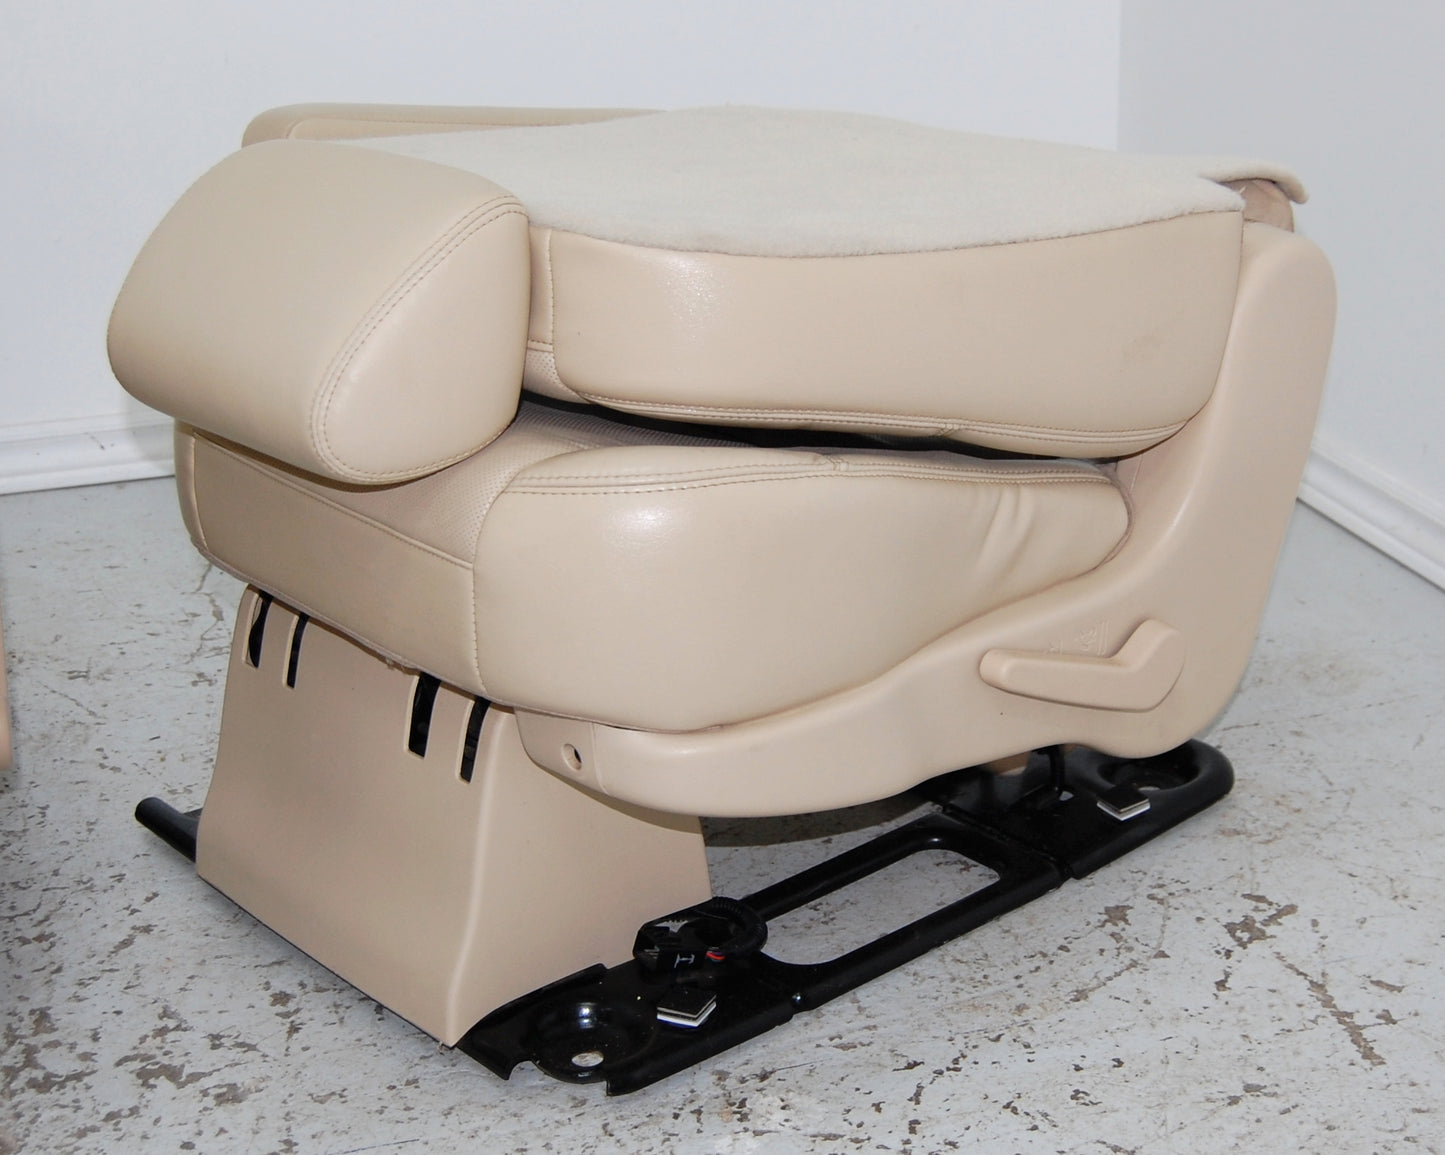 GMC Yukon XL 2007-2014 2nd Second Row Tan Leather Bucket Seats Suburban Denali Escalade ESV